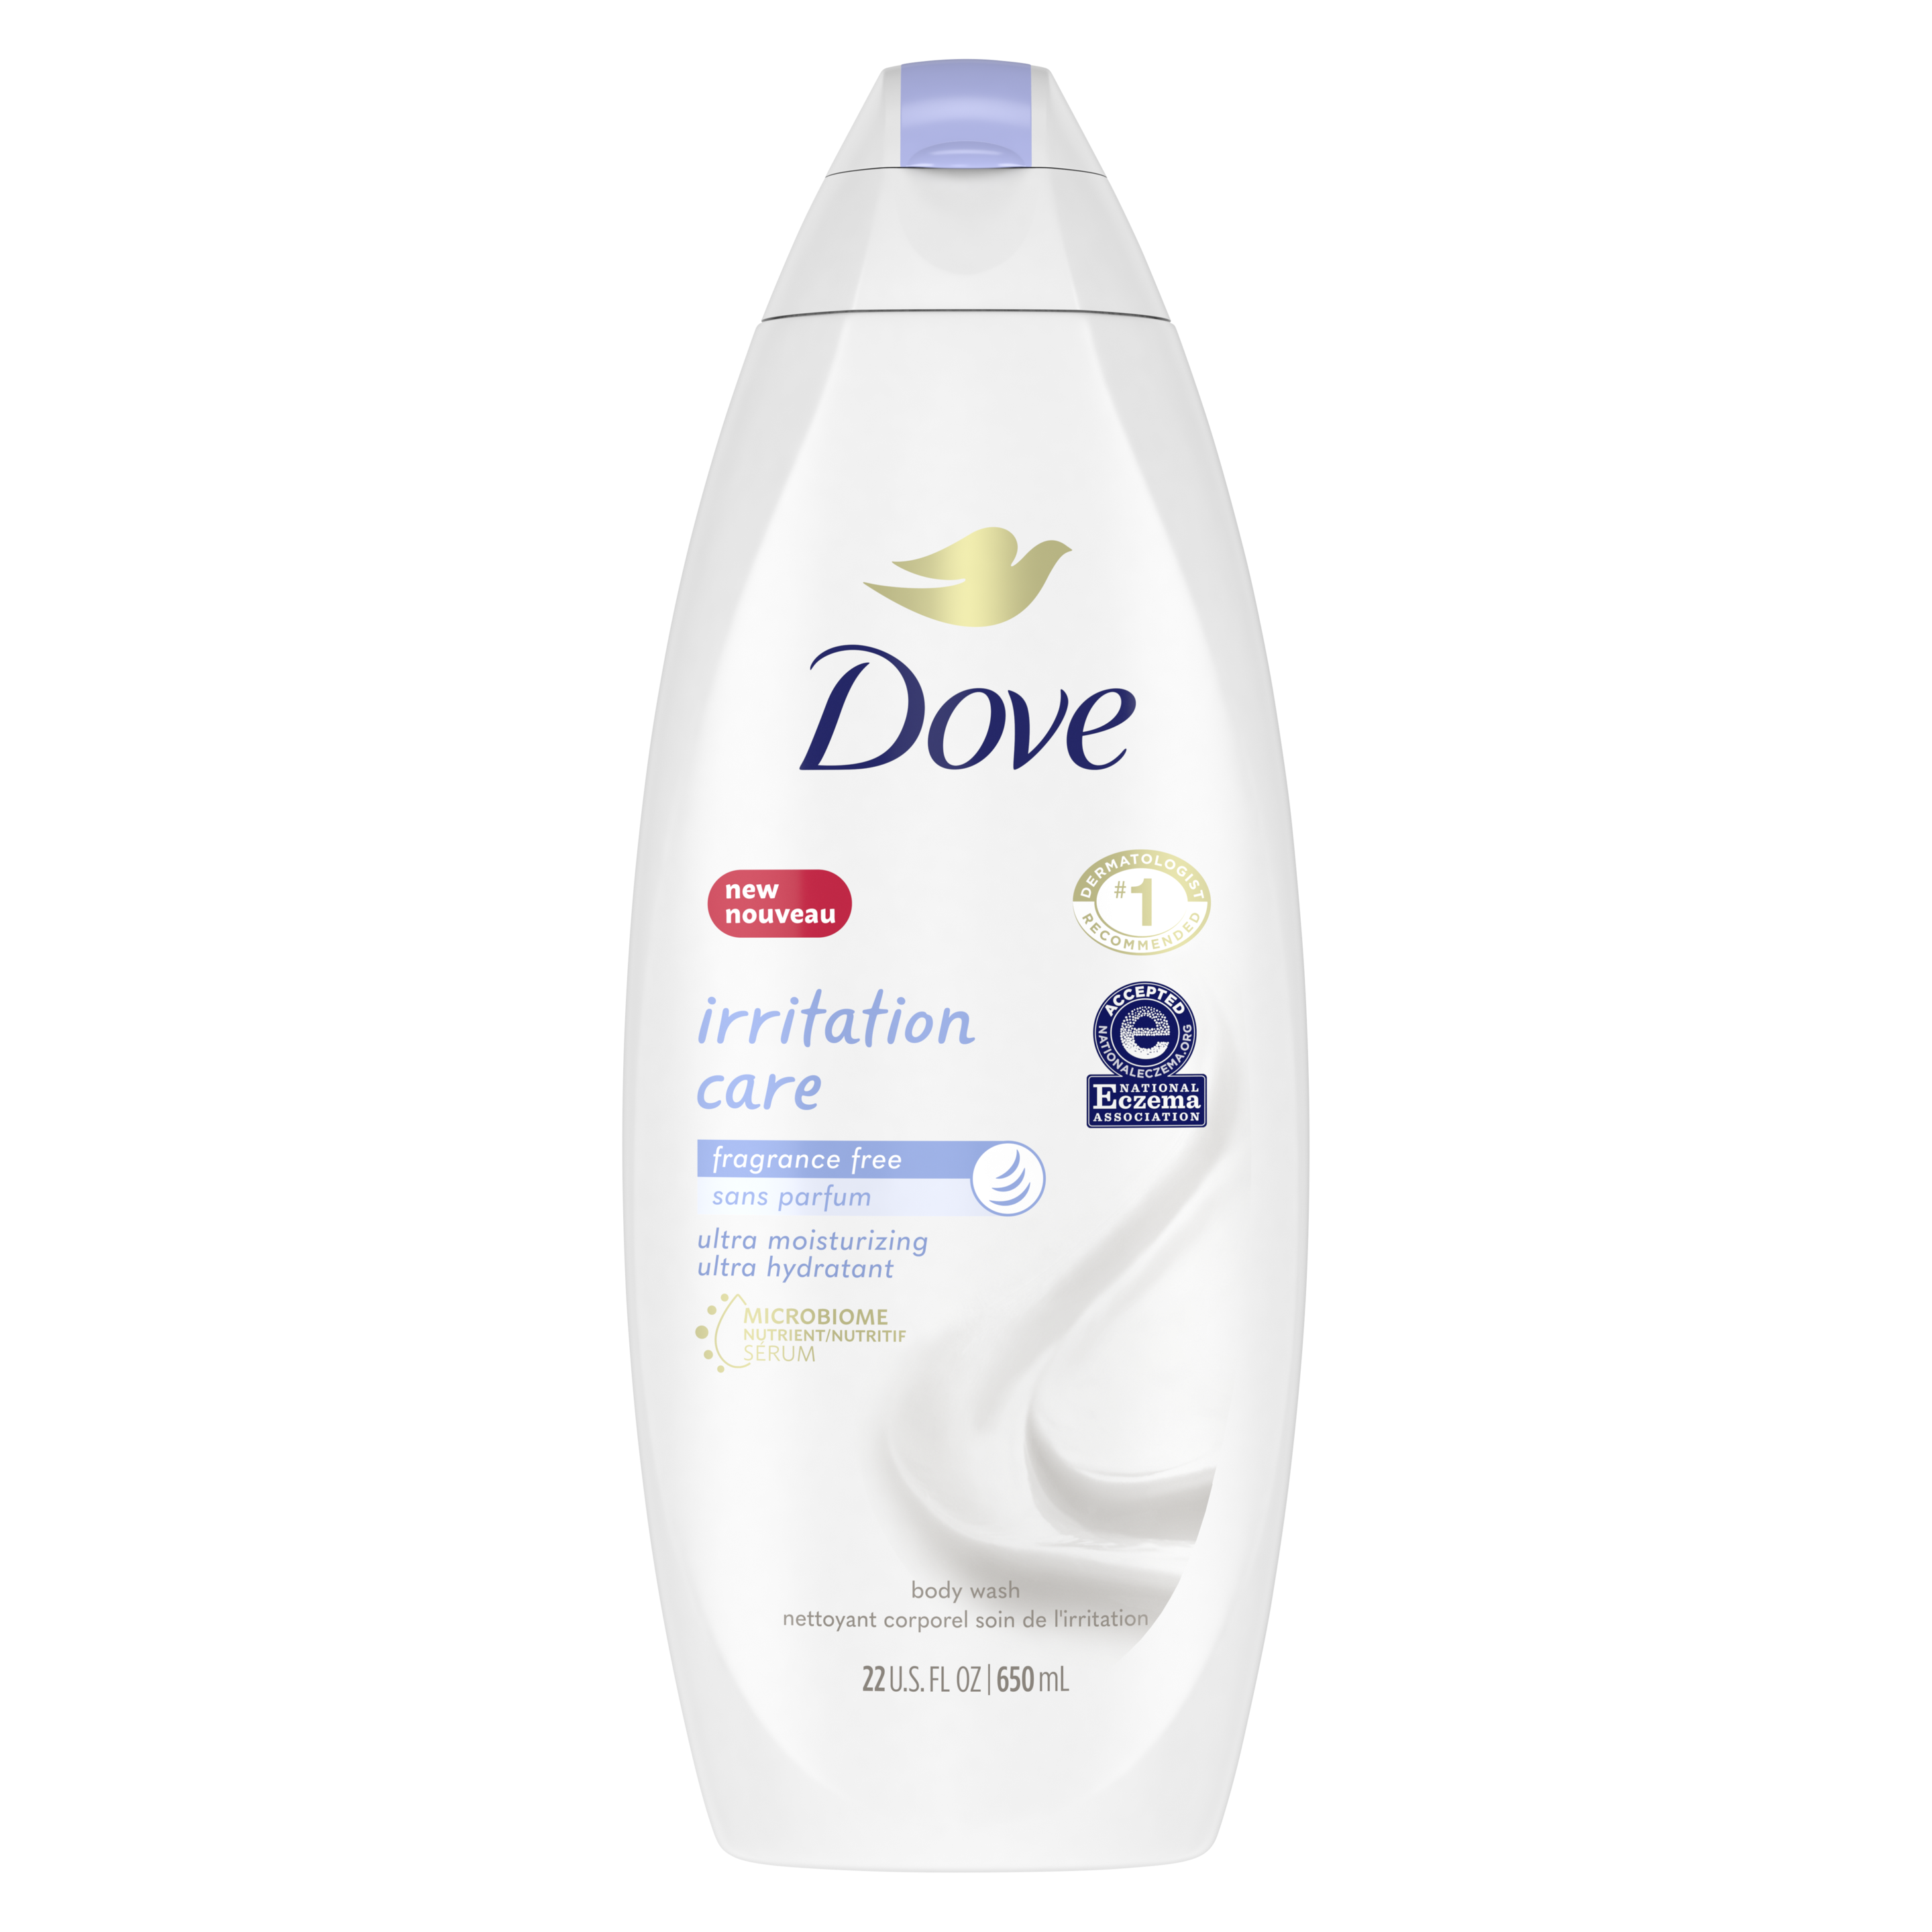 Dove Irritation Care Body Wash for Sensitive Skin